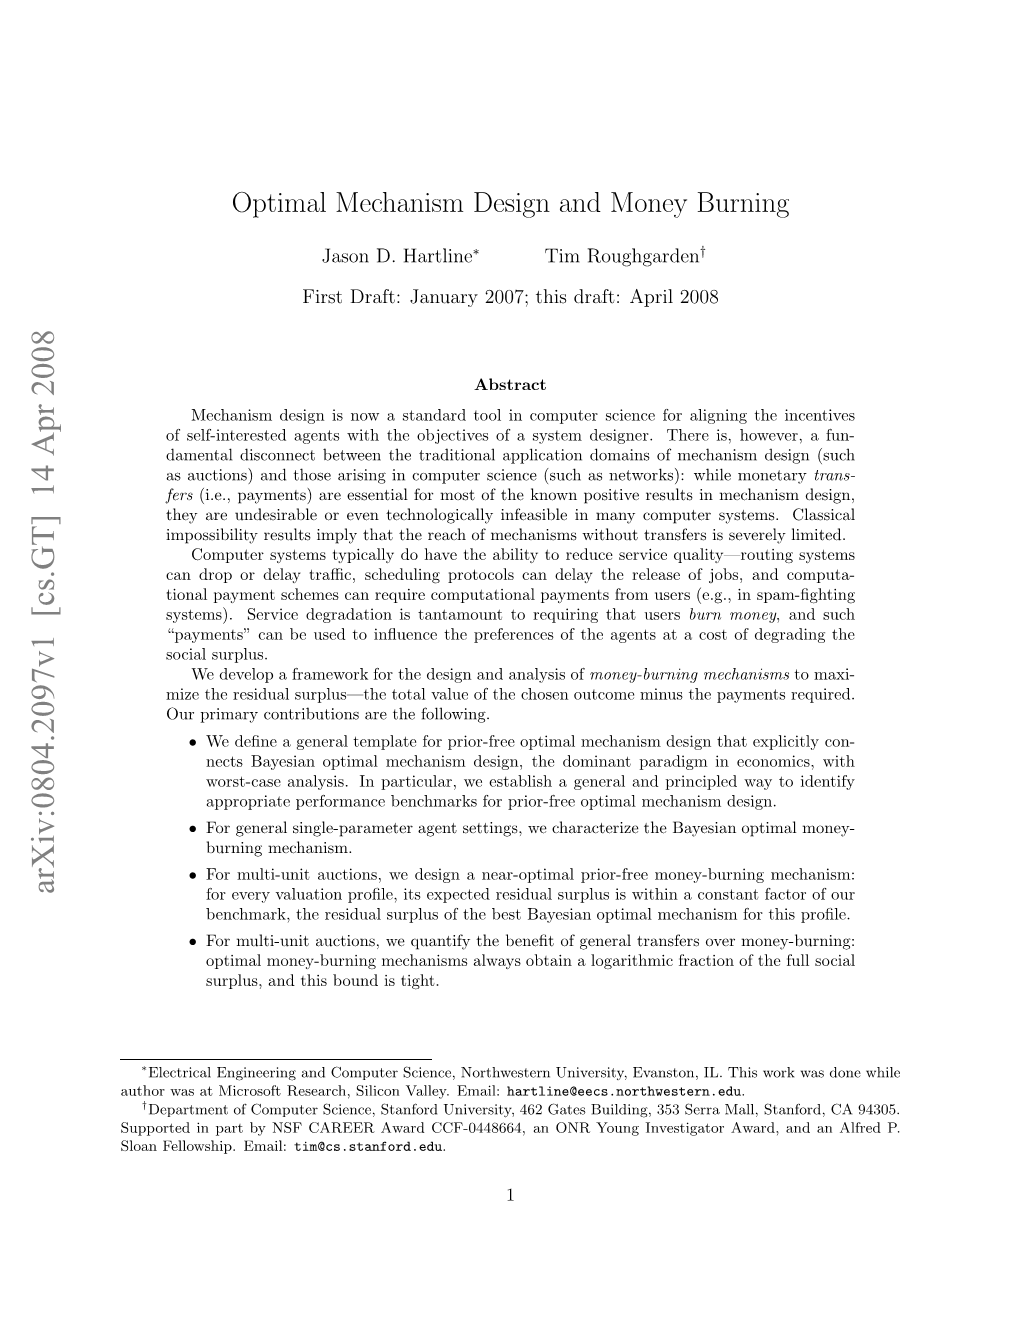 Optimal Mechansim Design and Money Burning